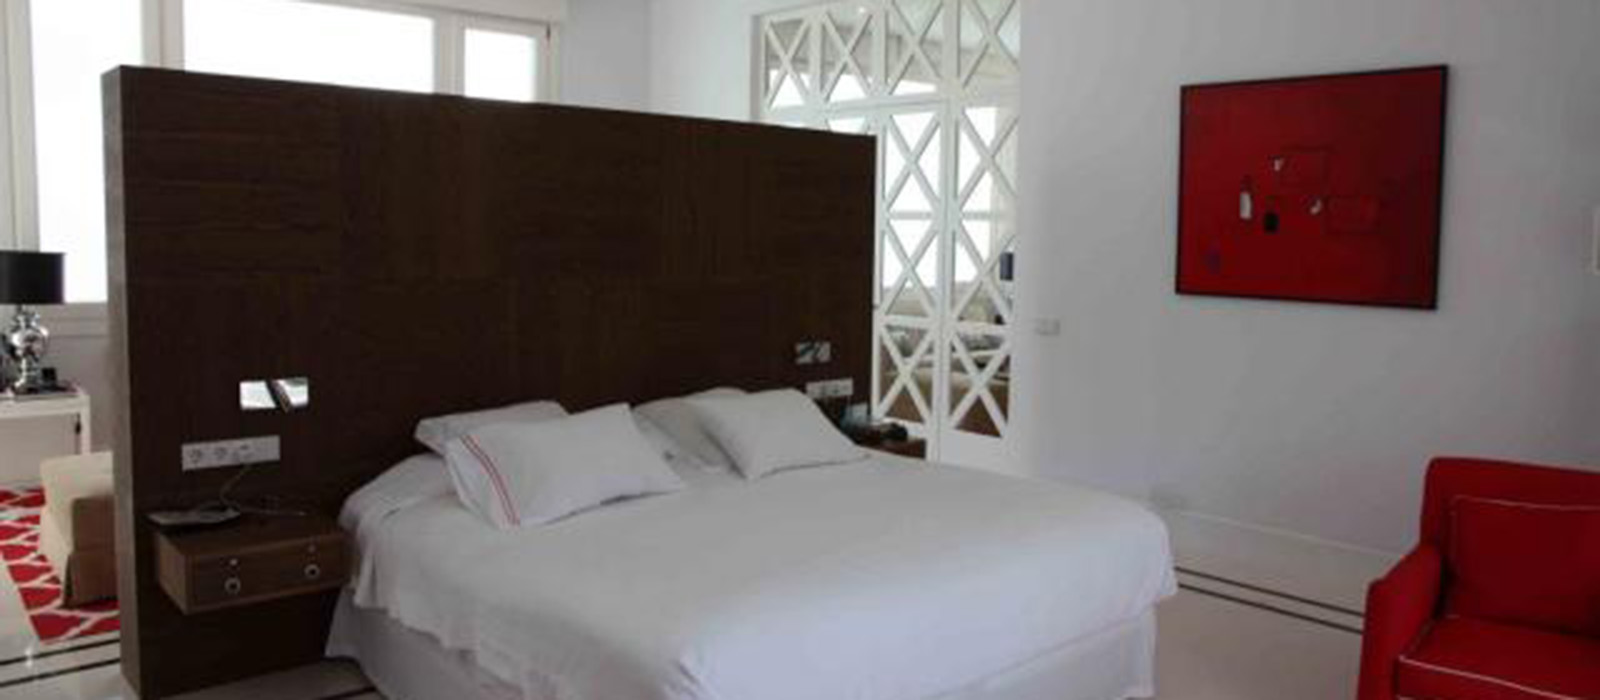 Guadalmina Baja, Marbella, Andalusia, Spain, 5 Bedrooms Bedrooms, ,5 BathroomsBathrooms,Houses - Villa,For sale,1038